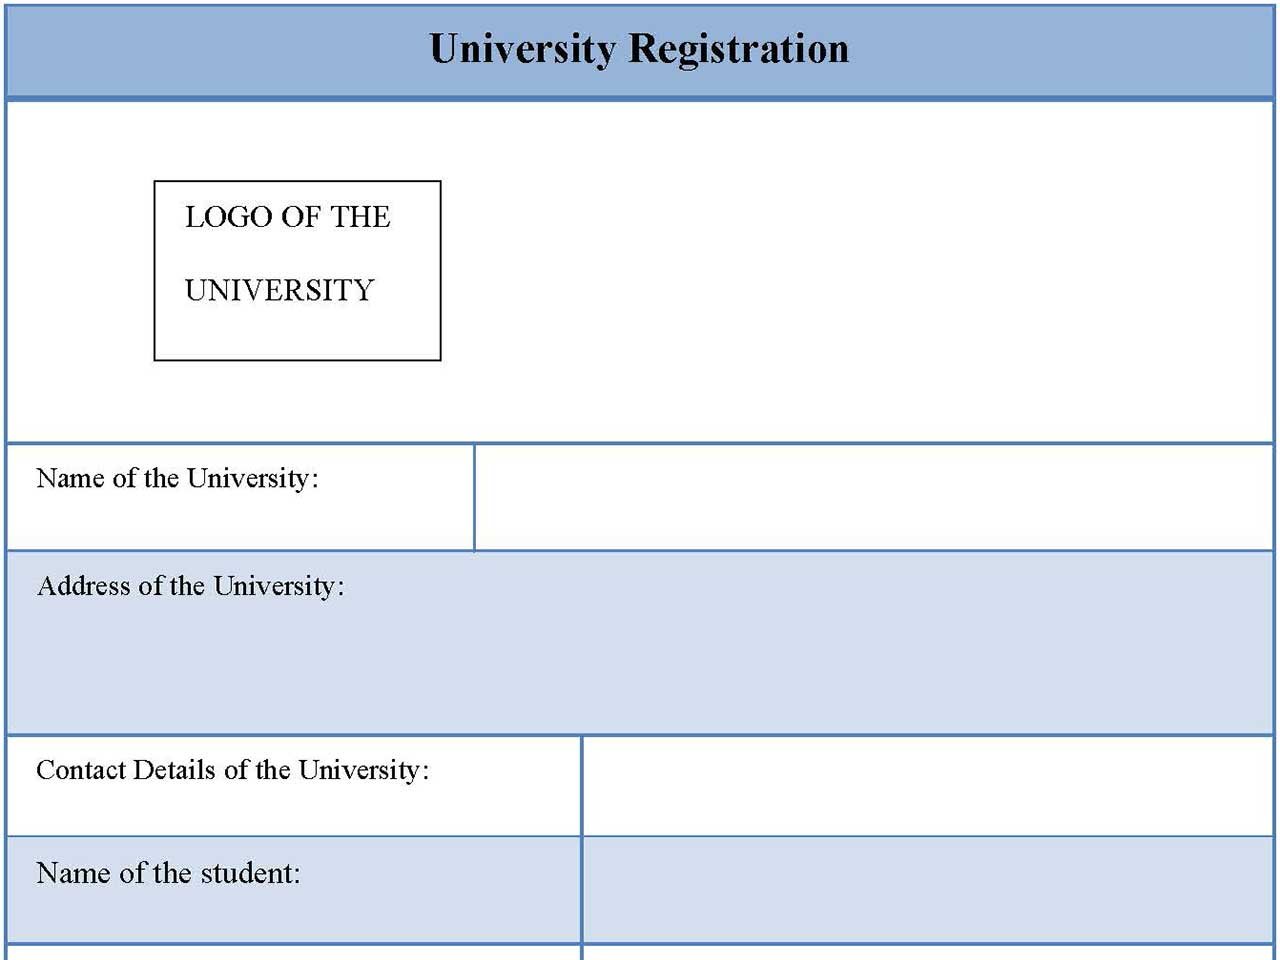 University Registration Form